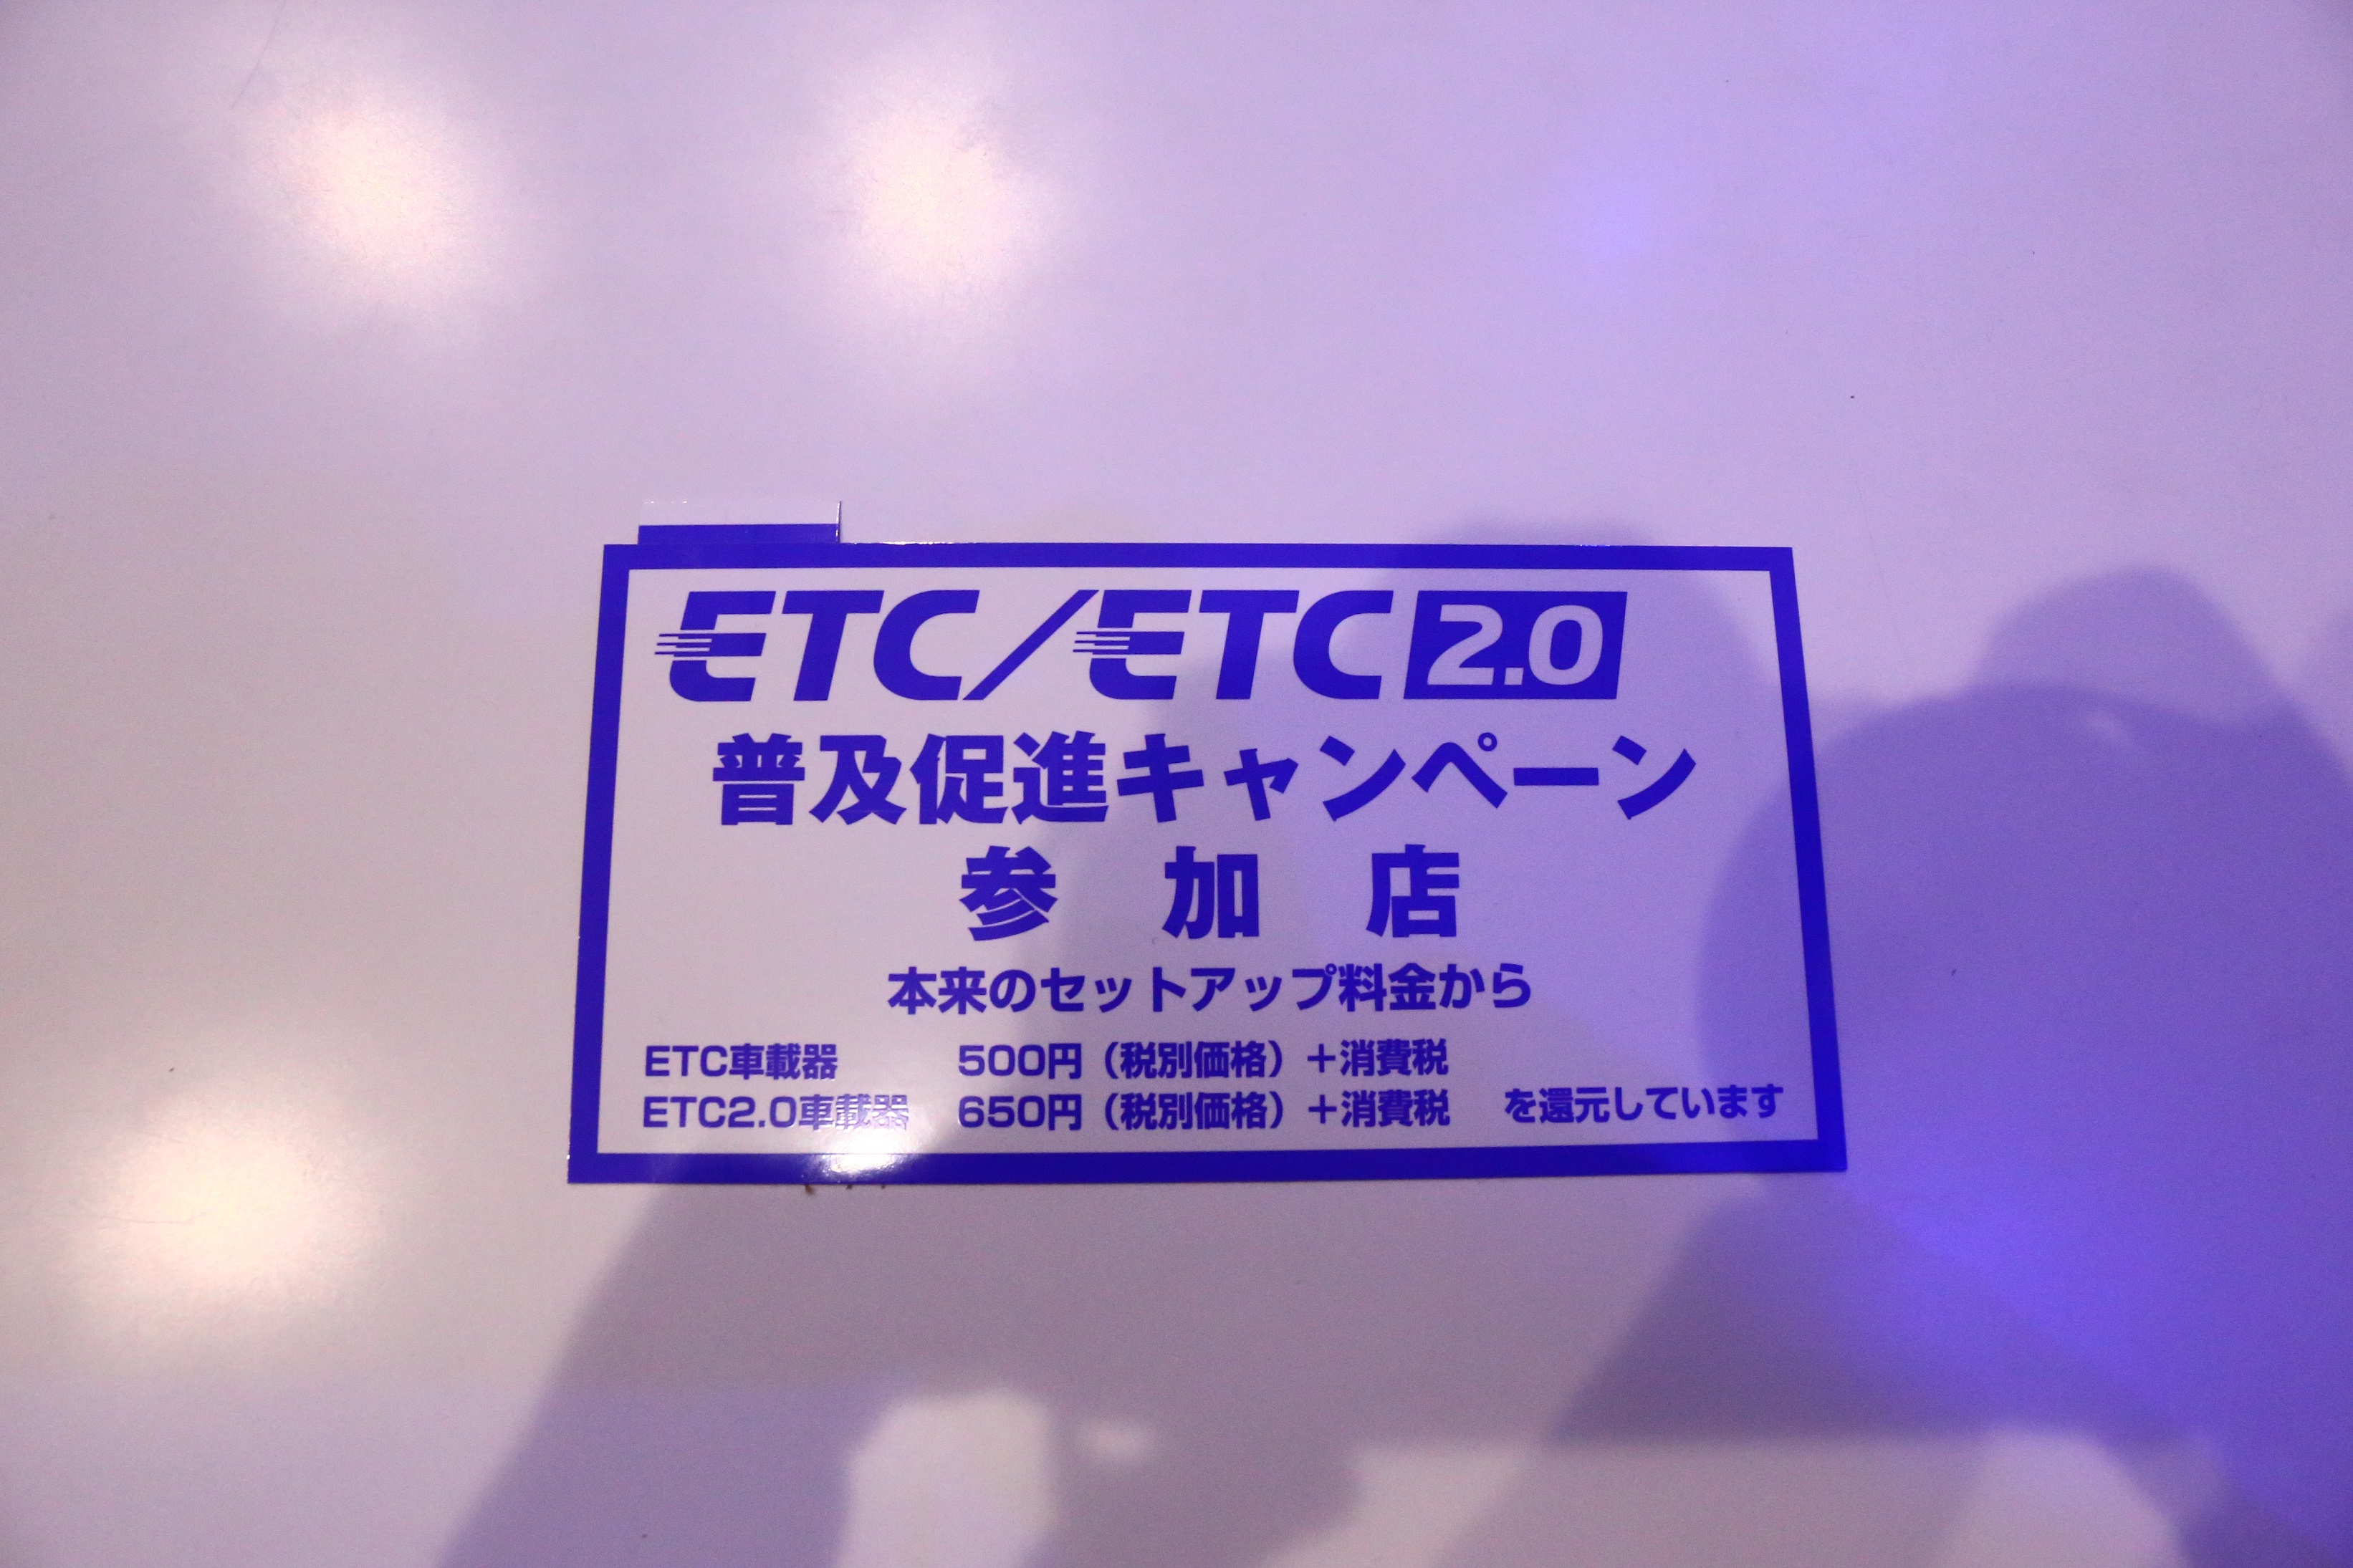 ETC ETC2.0 ETCセットアップ 再セットアップ 助成金対象 群馬 高崎 